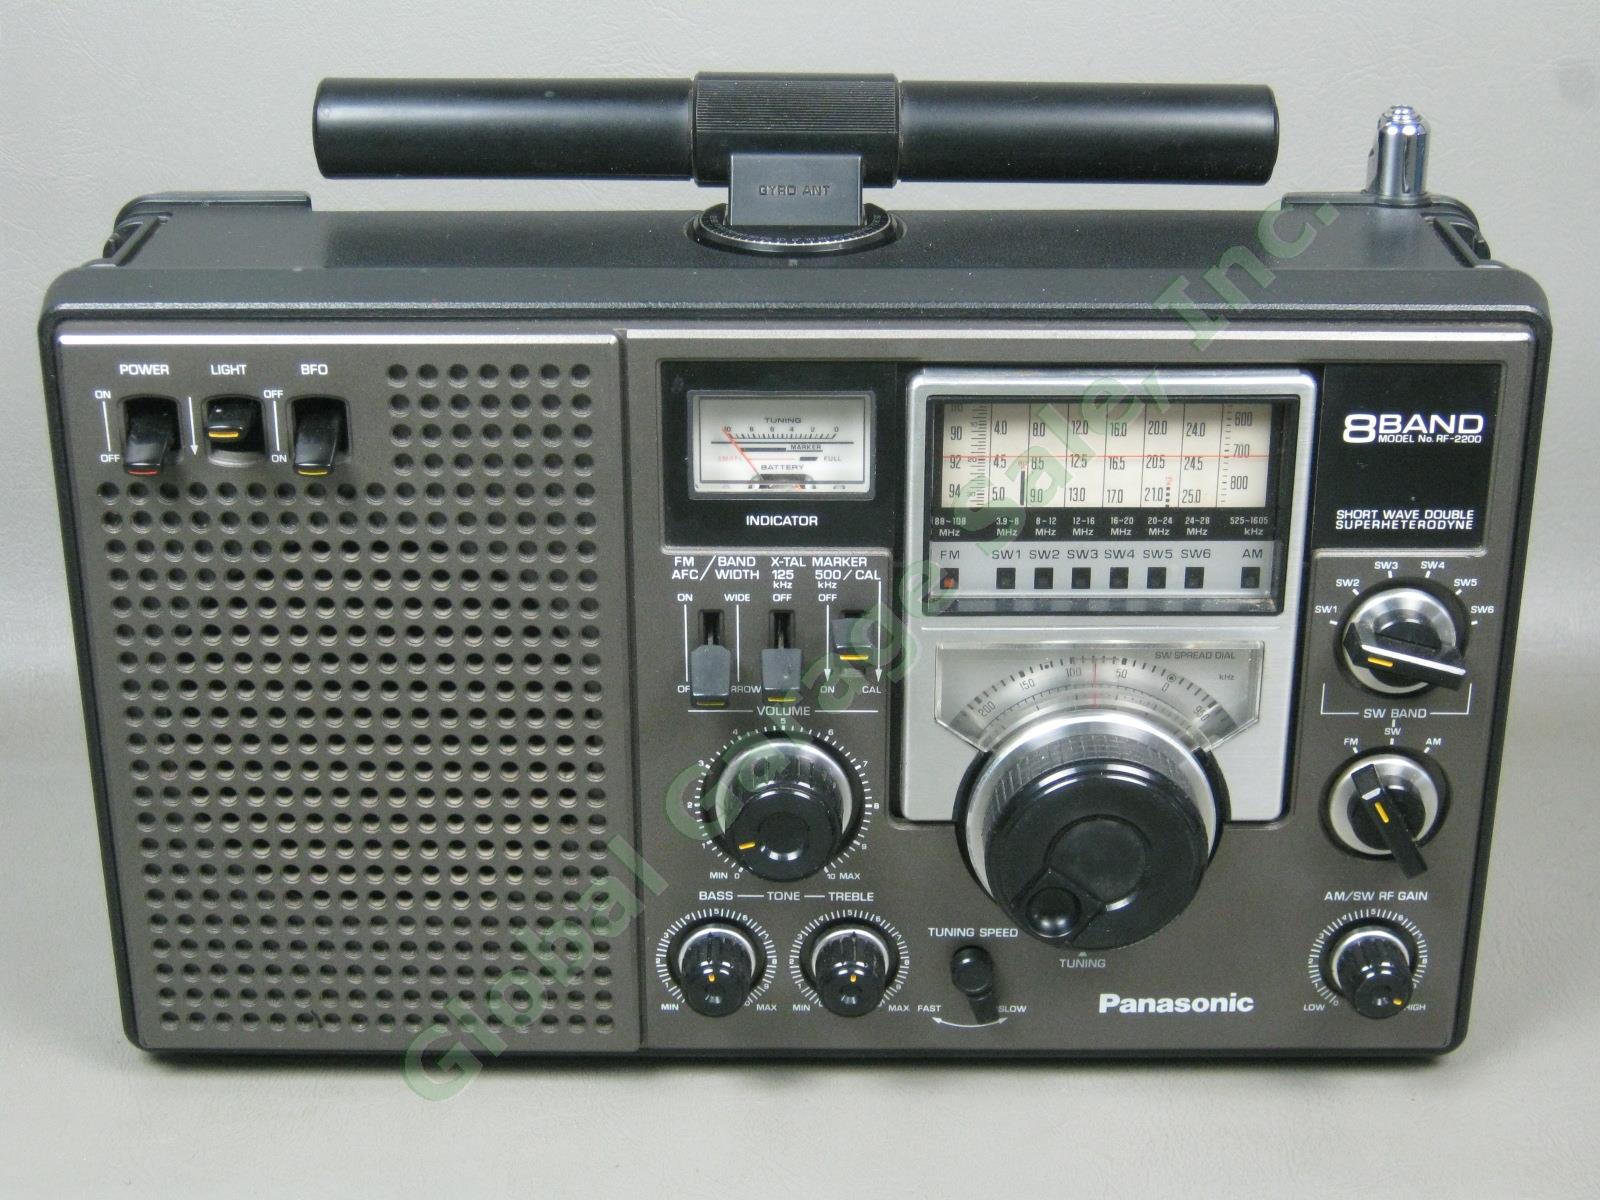 Panasonic RF-2200 8-Band Short Wave Double Superheterodyne FM/AM/SW Radio As-Is 2